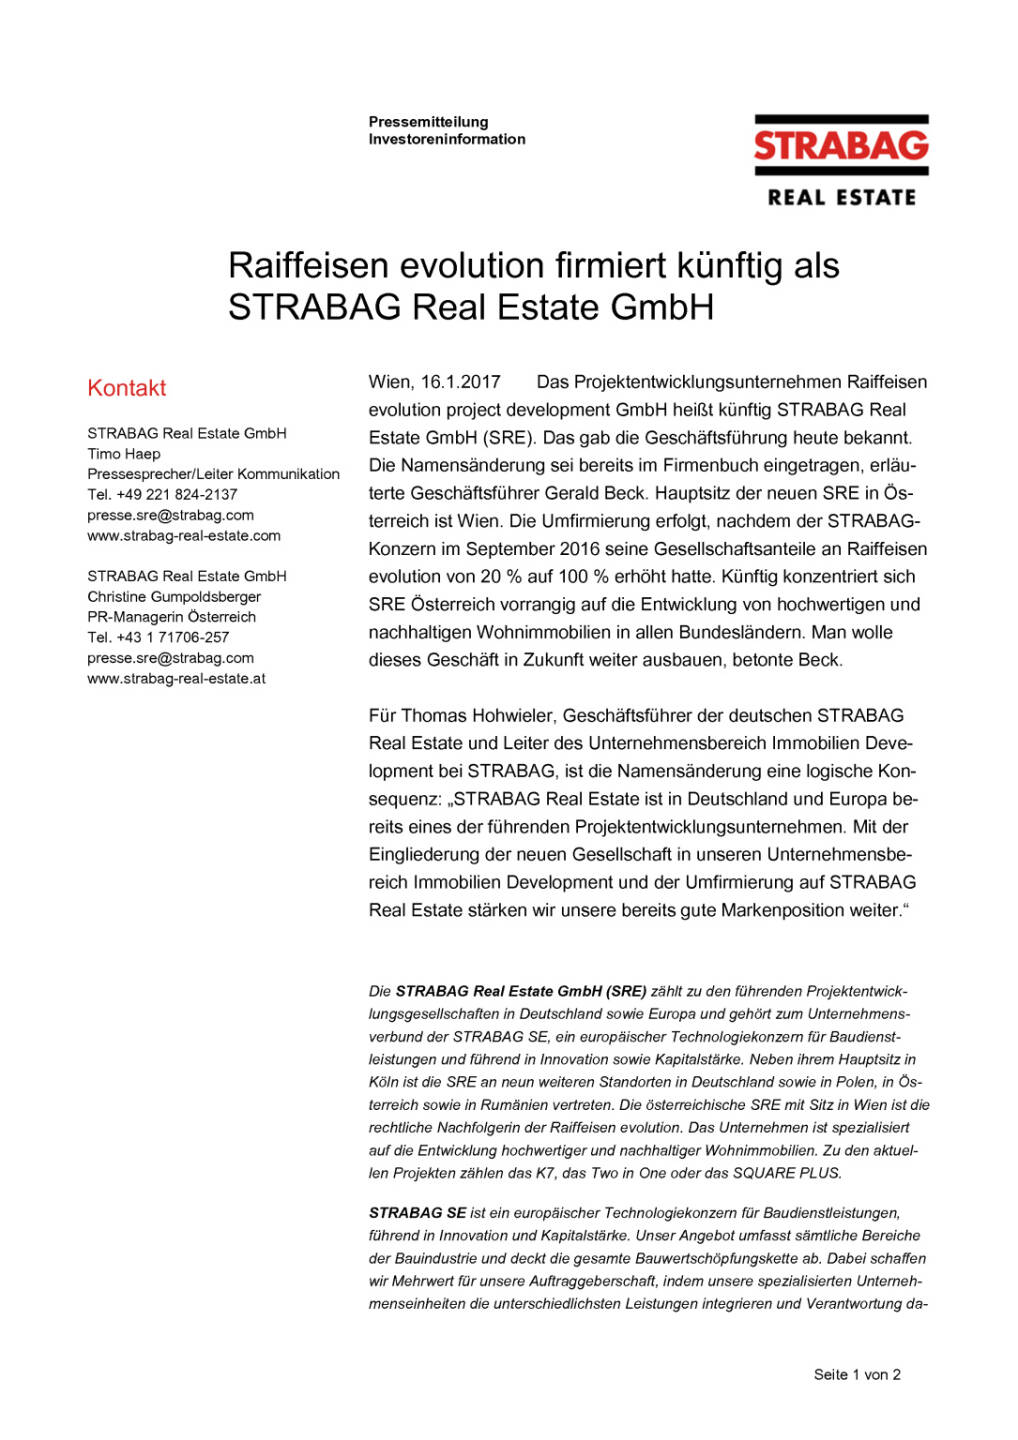 Raiffeisen evolution firmiert künftig als Strabag Real Estate GmbH, Seite 1/2, komplettes Dokument unter http://boerse-social.com/static/uploads/file_2062_raiffeisen_evolution_firmiert_kunftig_als_strabag_real_estate_gmbh.pdf